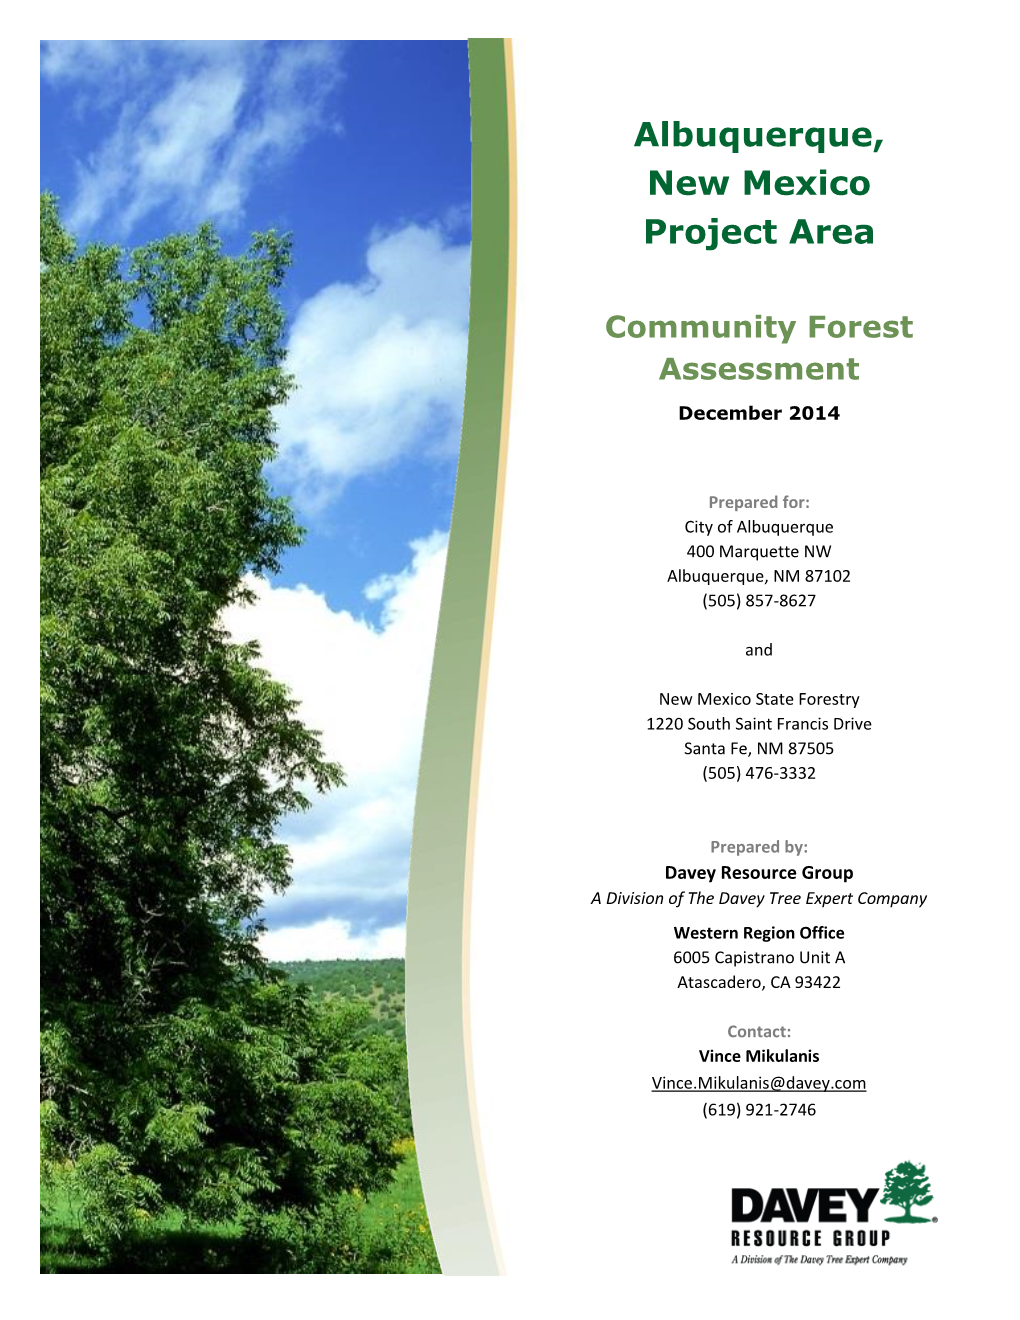 Albuquerque, New Mexico – Community Forest Assessment December 2014